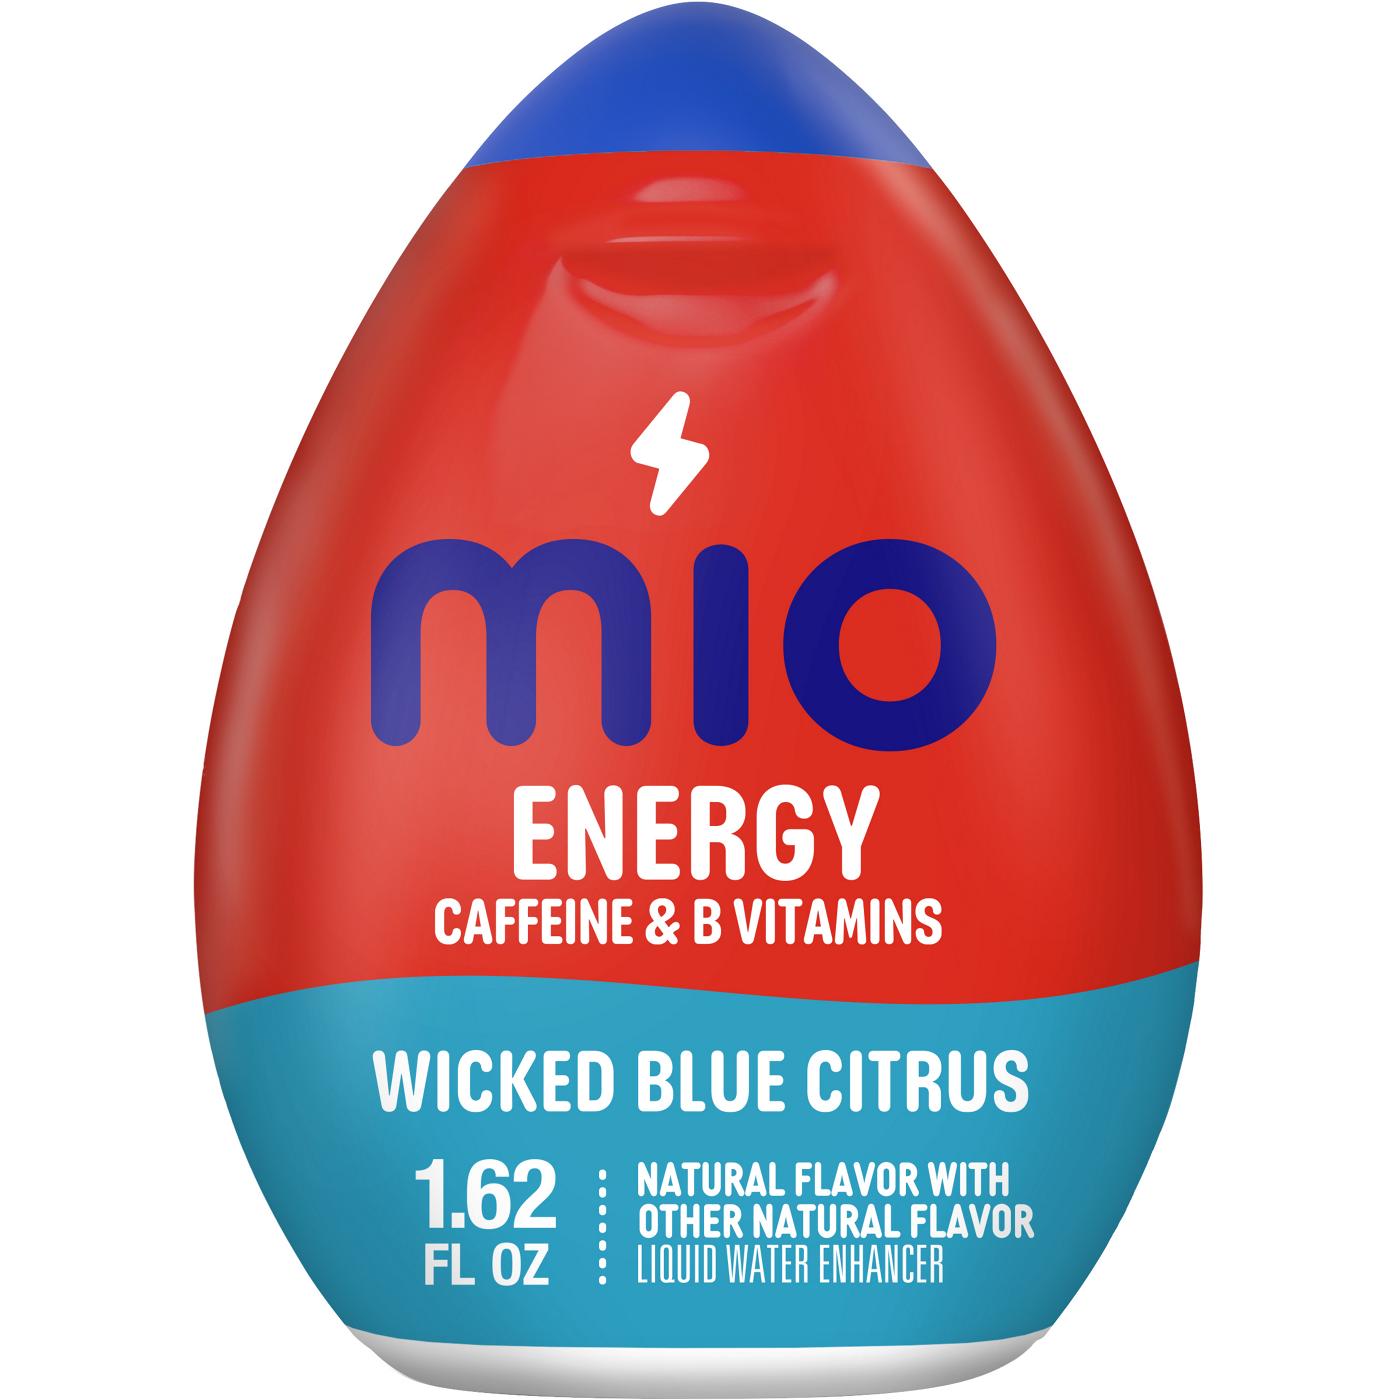 Mio Wicked Blue Citrus Energy Liquid Water Enhancer; image 1 of 2